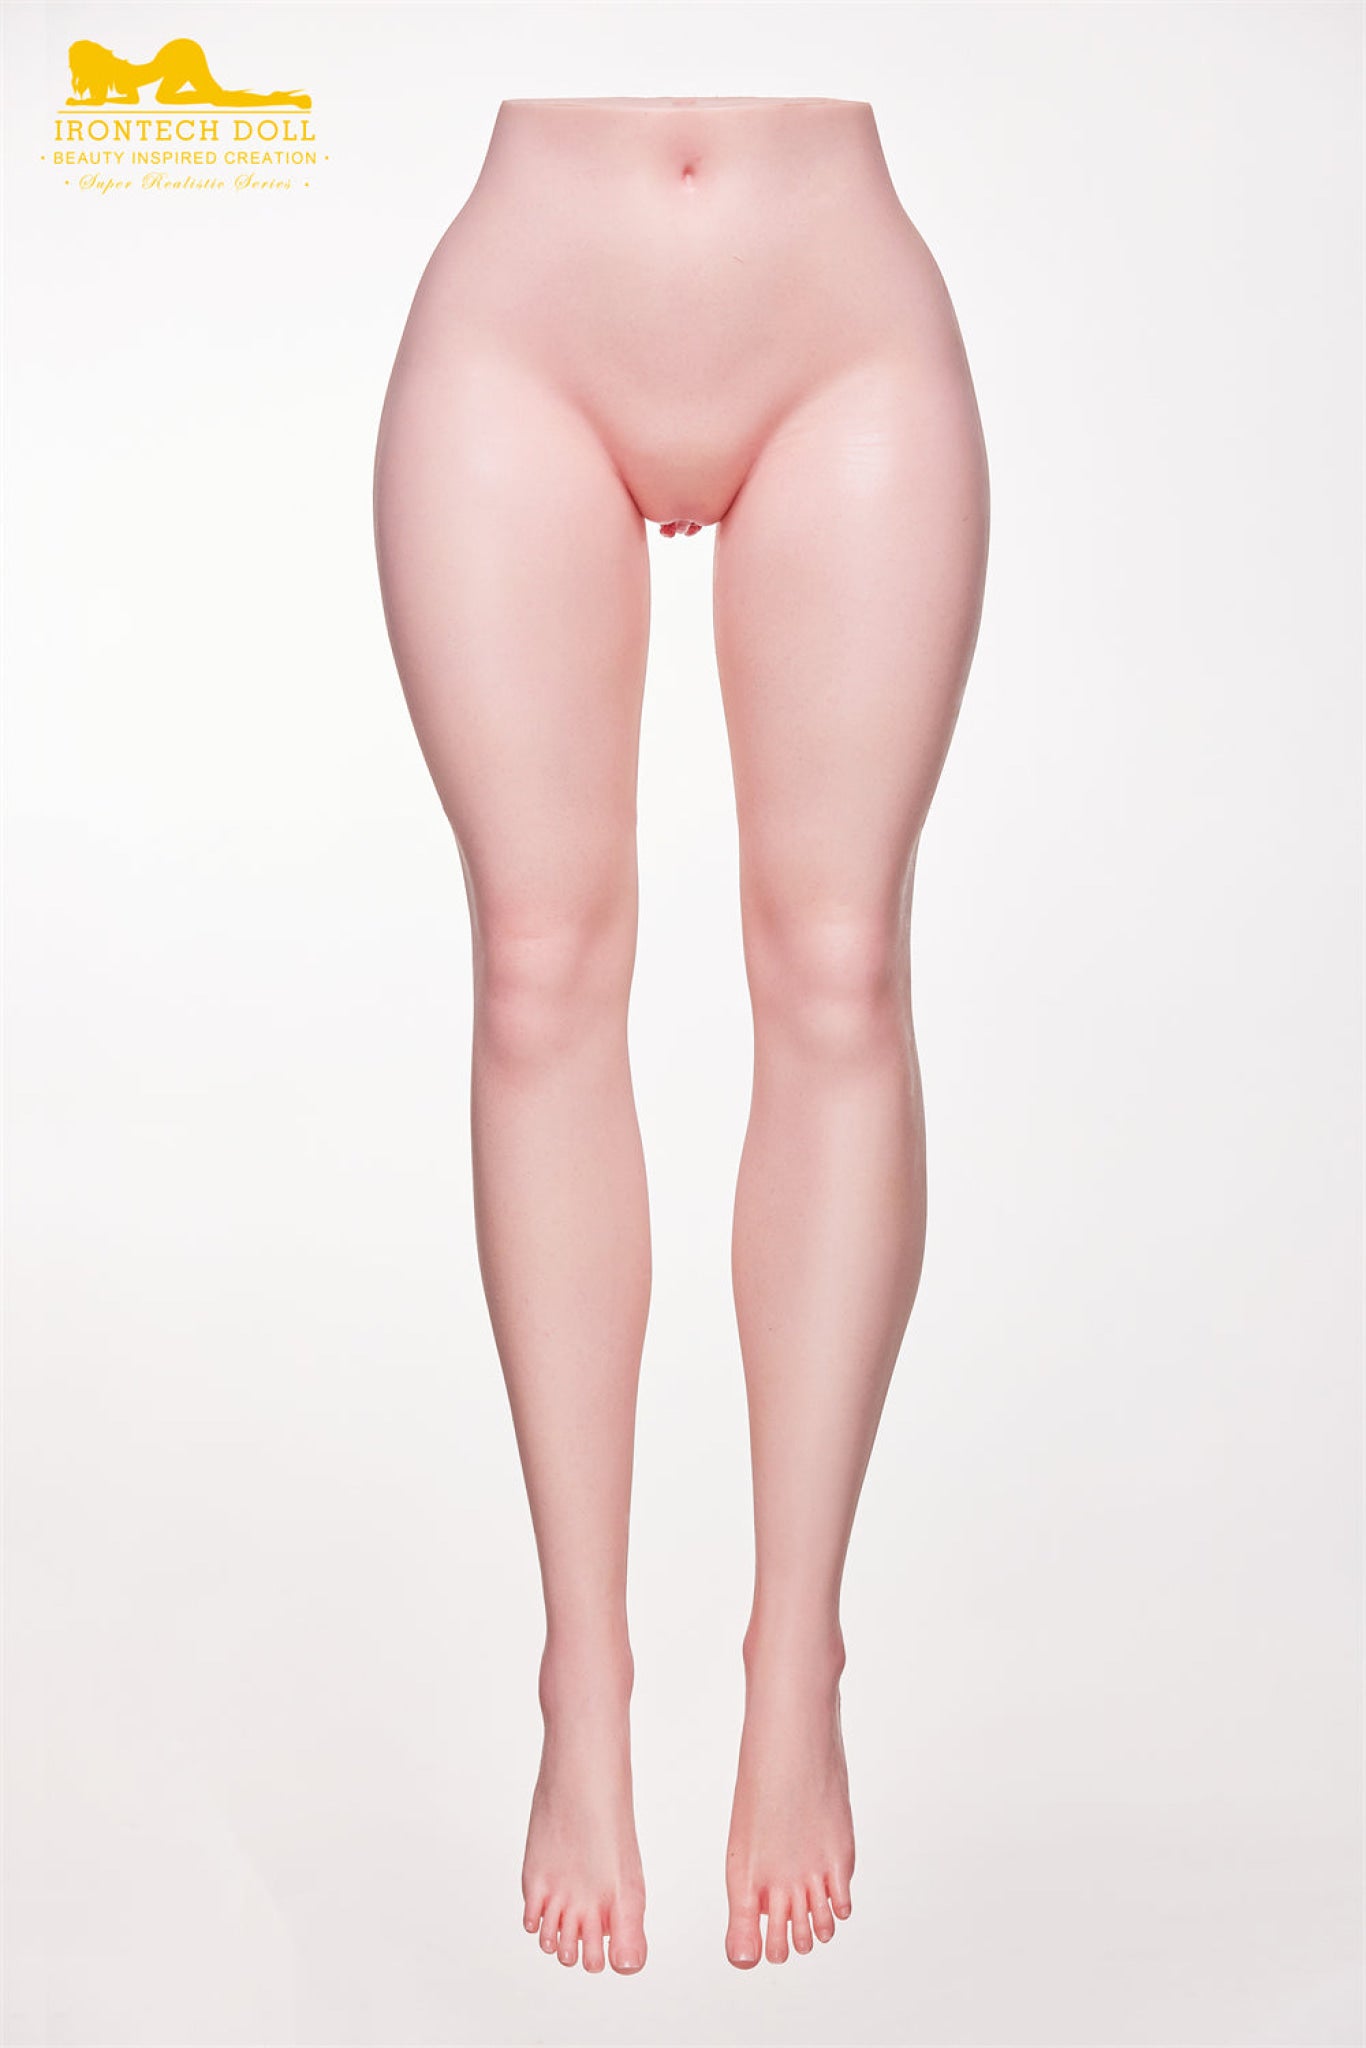 2'5" (76cm) Silicone Torso Legs - IronTech Doll® Iron Tech